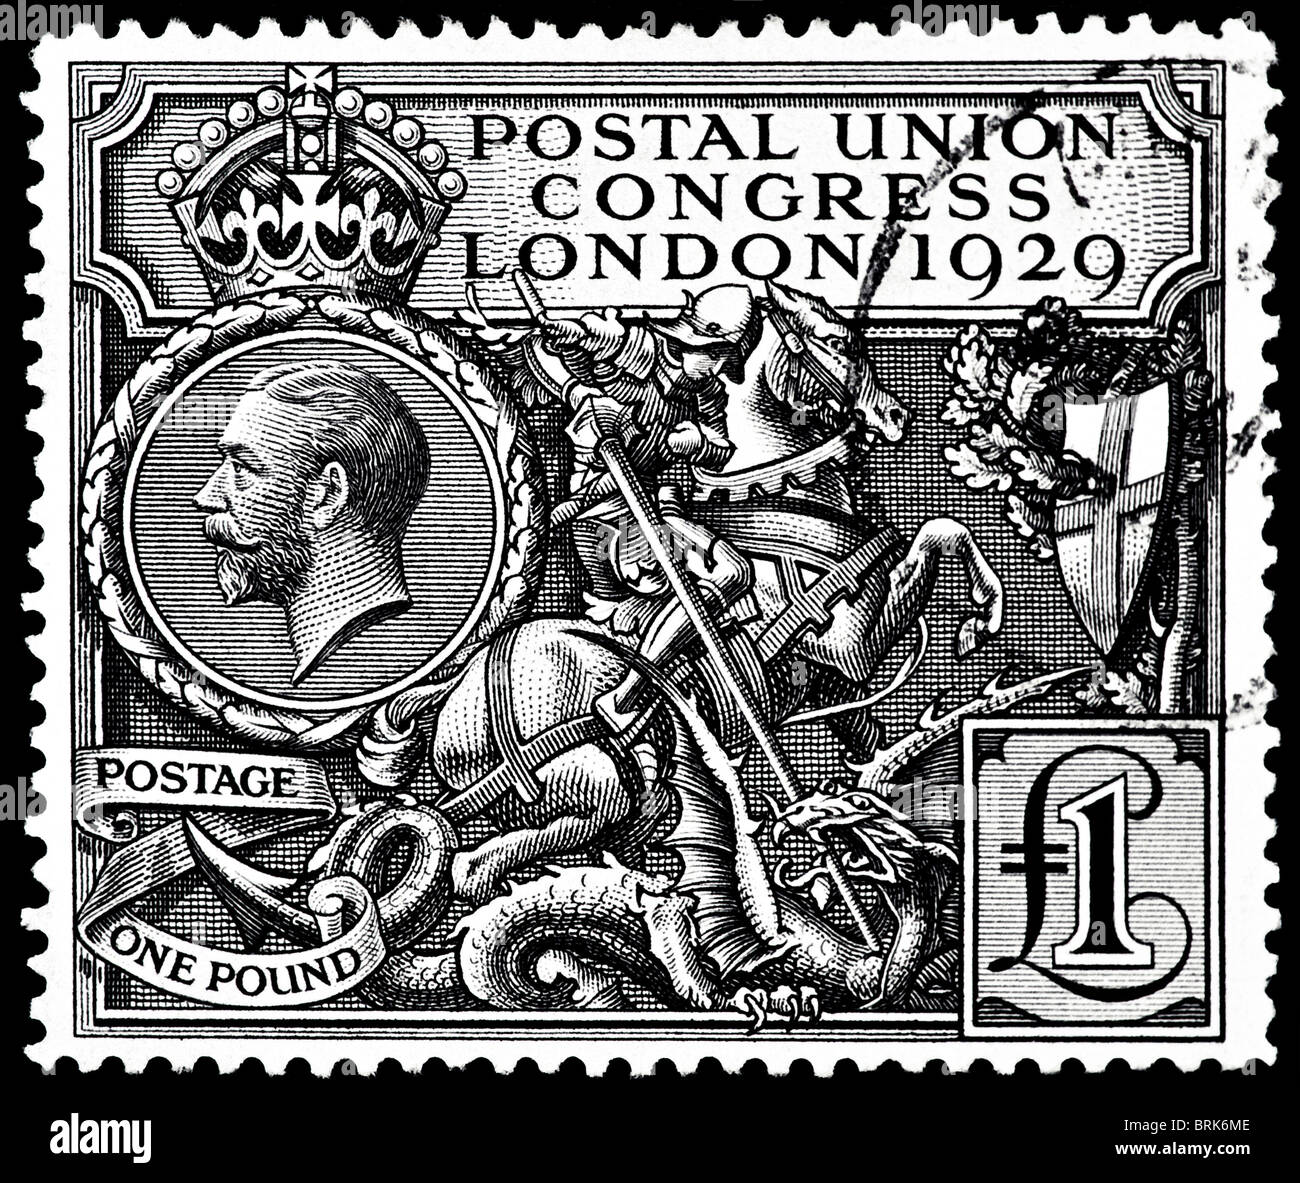 Rare 1929 Great Britain £1 Postal Union Congress London postage stamp. Stock Photo